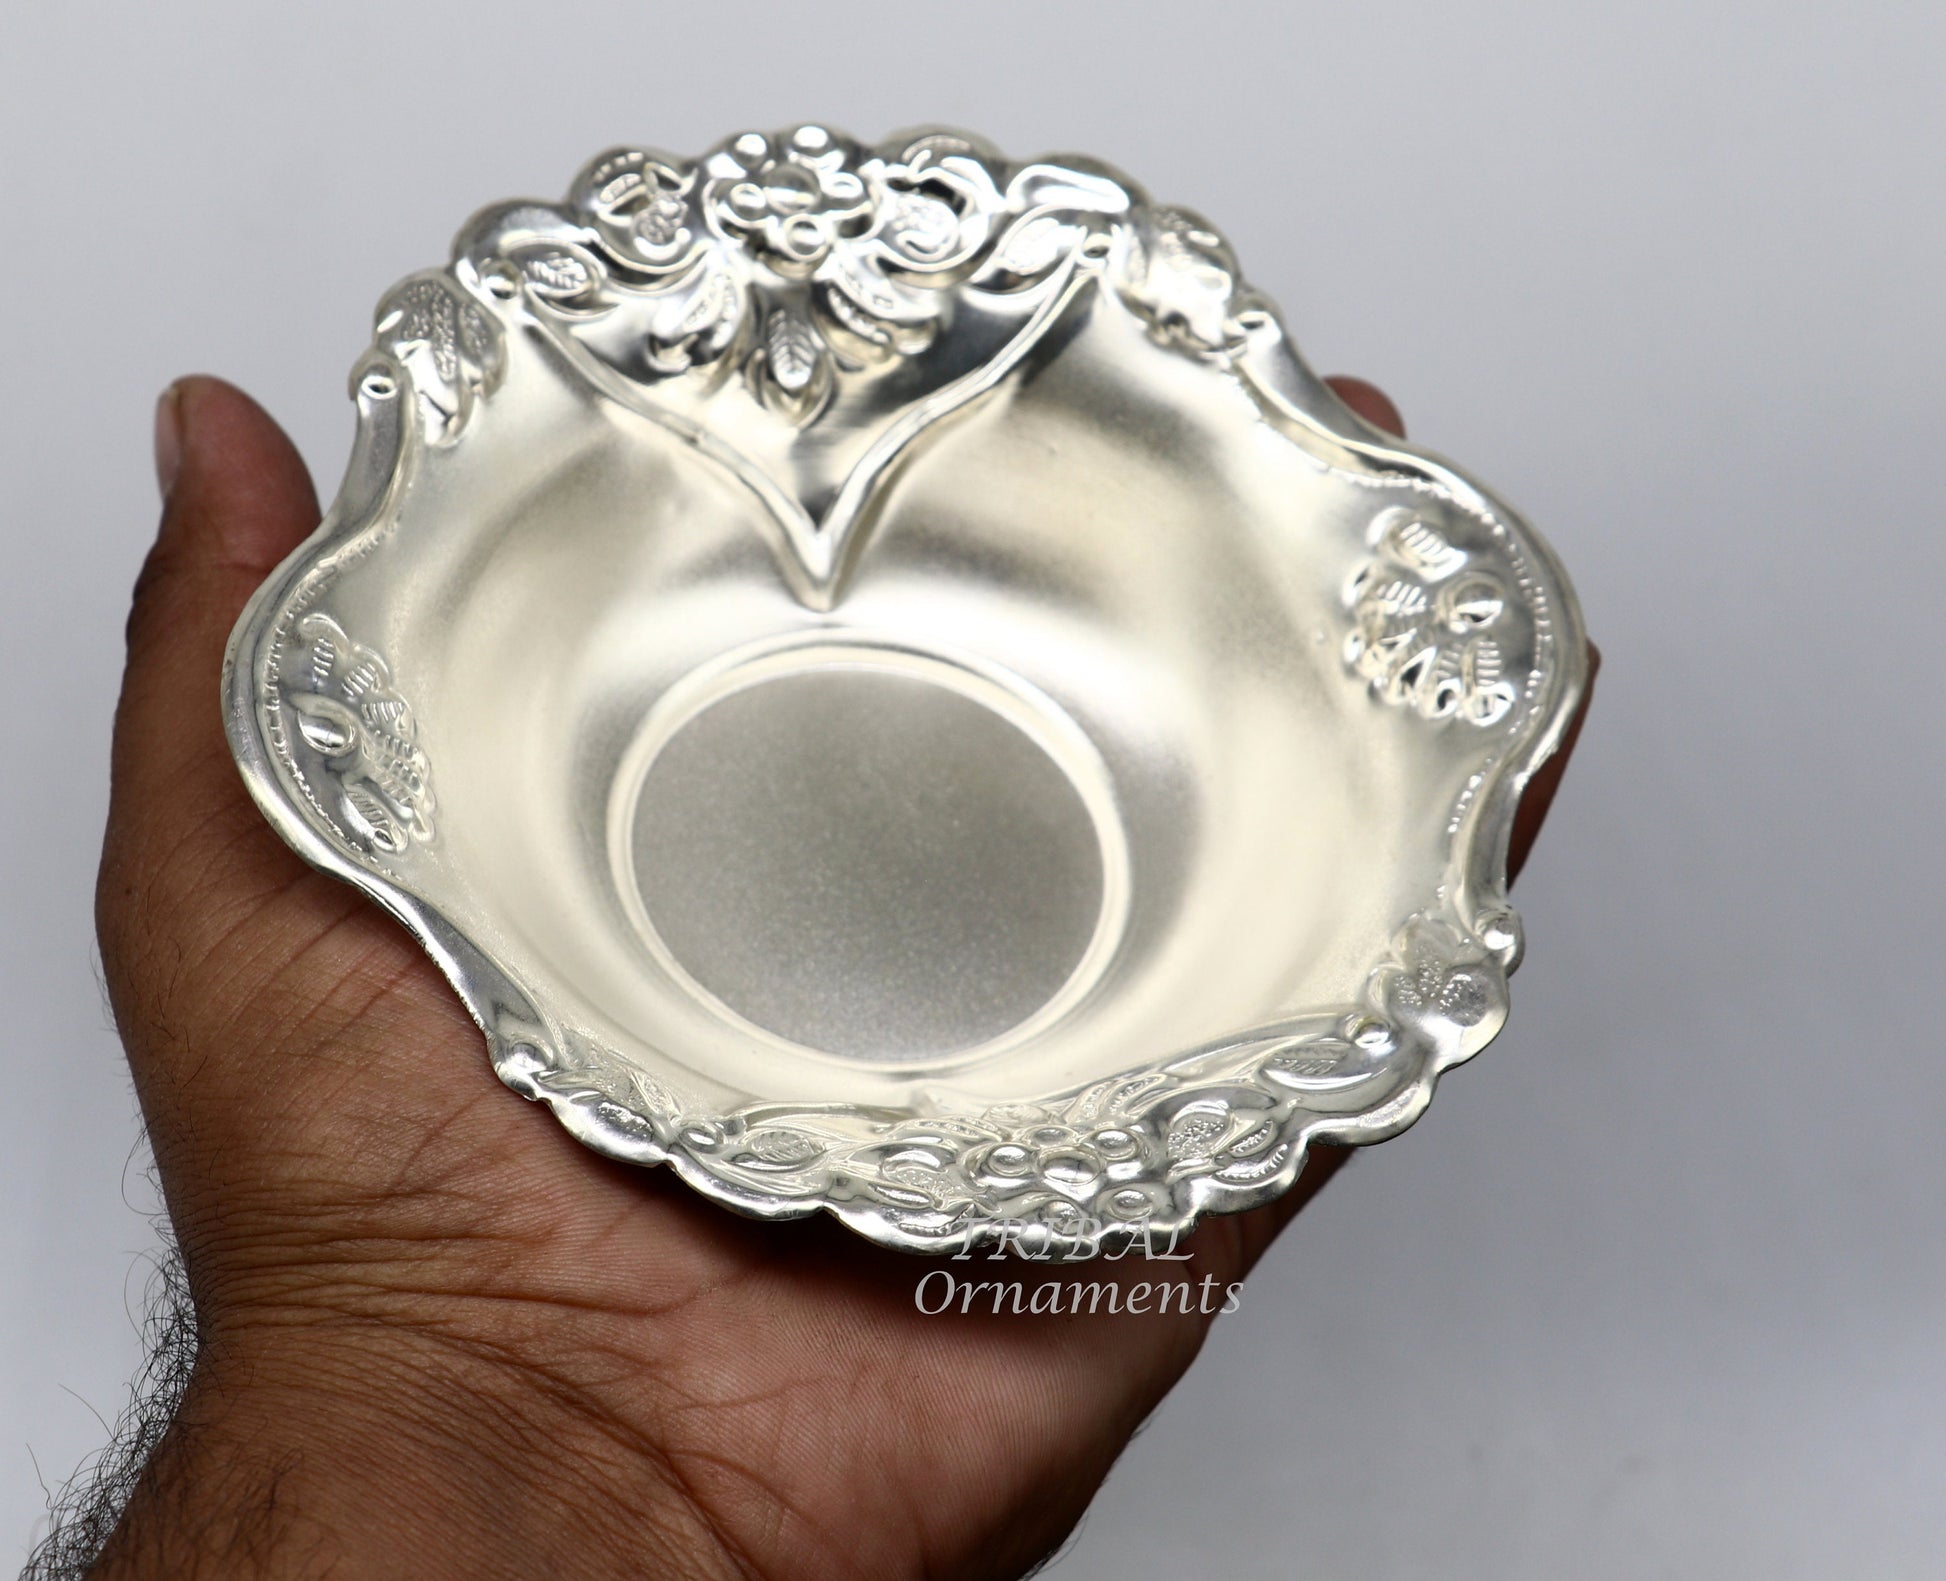 999 fine silver customized design Prasadam bowl, puja utensils, worshipping article, silver Idols serving bowl temple article su859 - TRIBAL ORNAMENTS